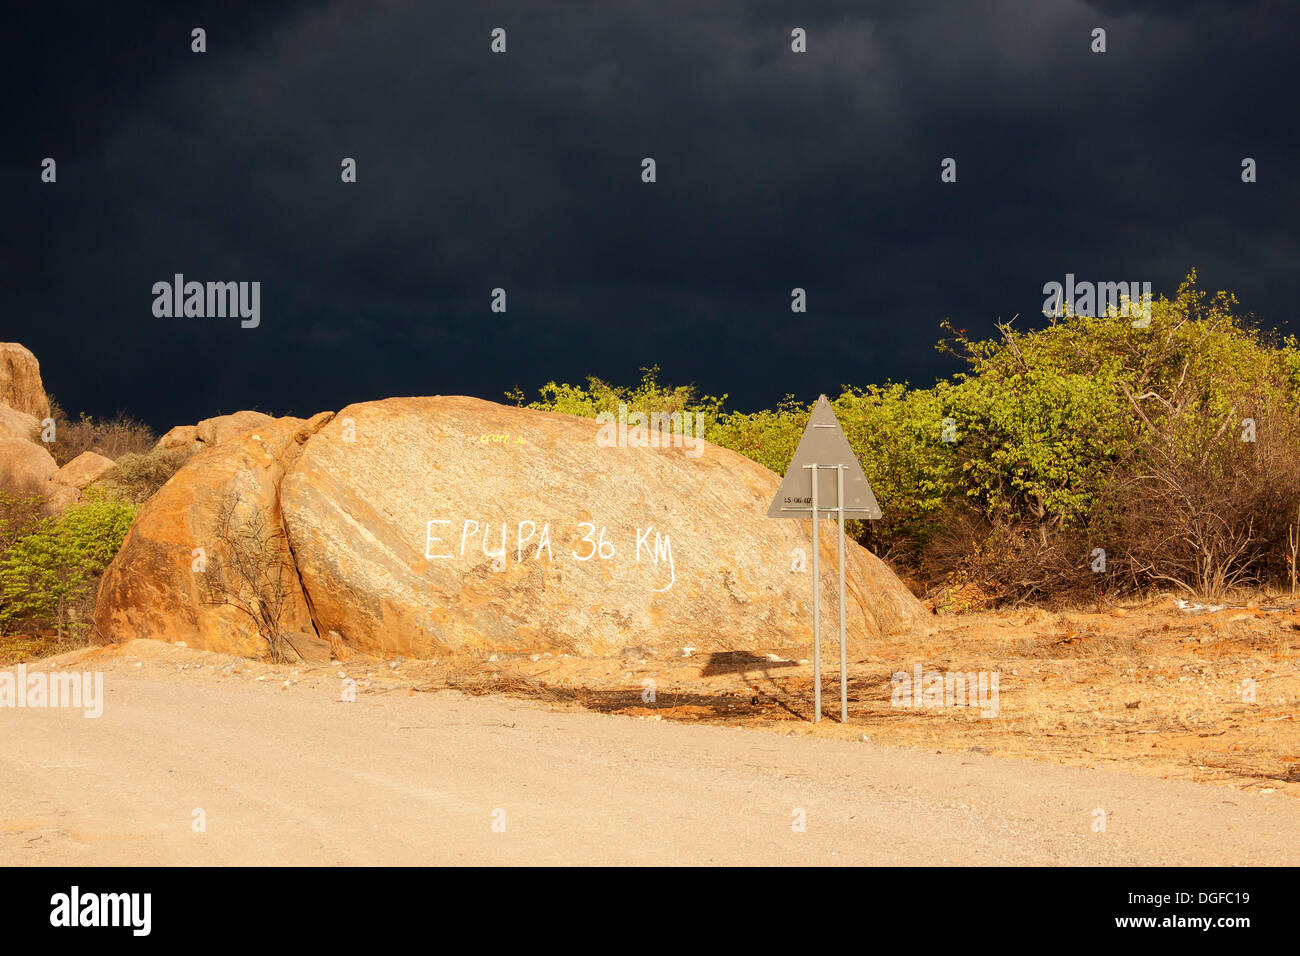 Dunkle Sturmfront über Felsen mit Schild "Epupa 36 km", Kaokoland, Kunene, Namibia Stockfoto